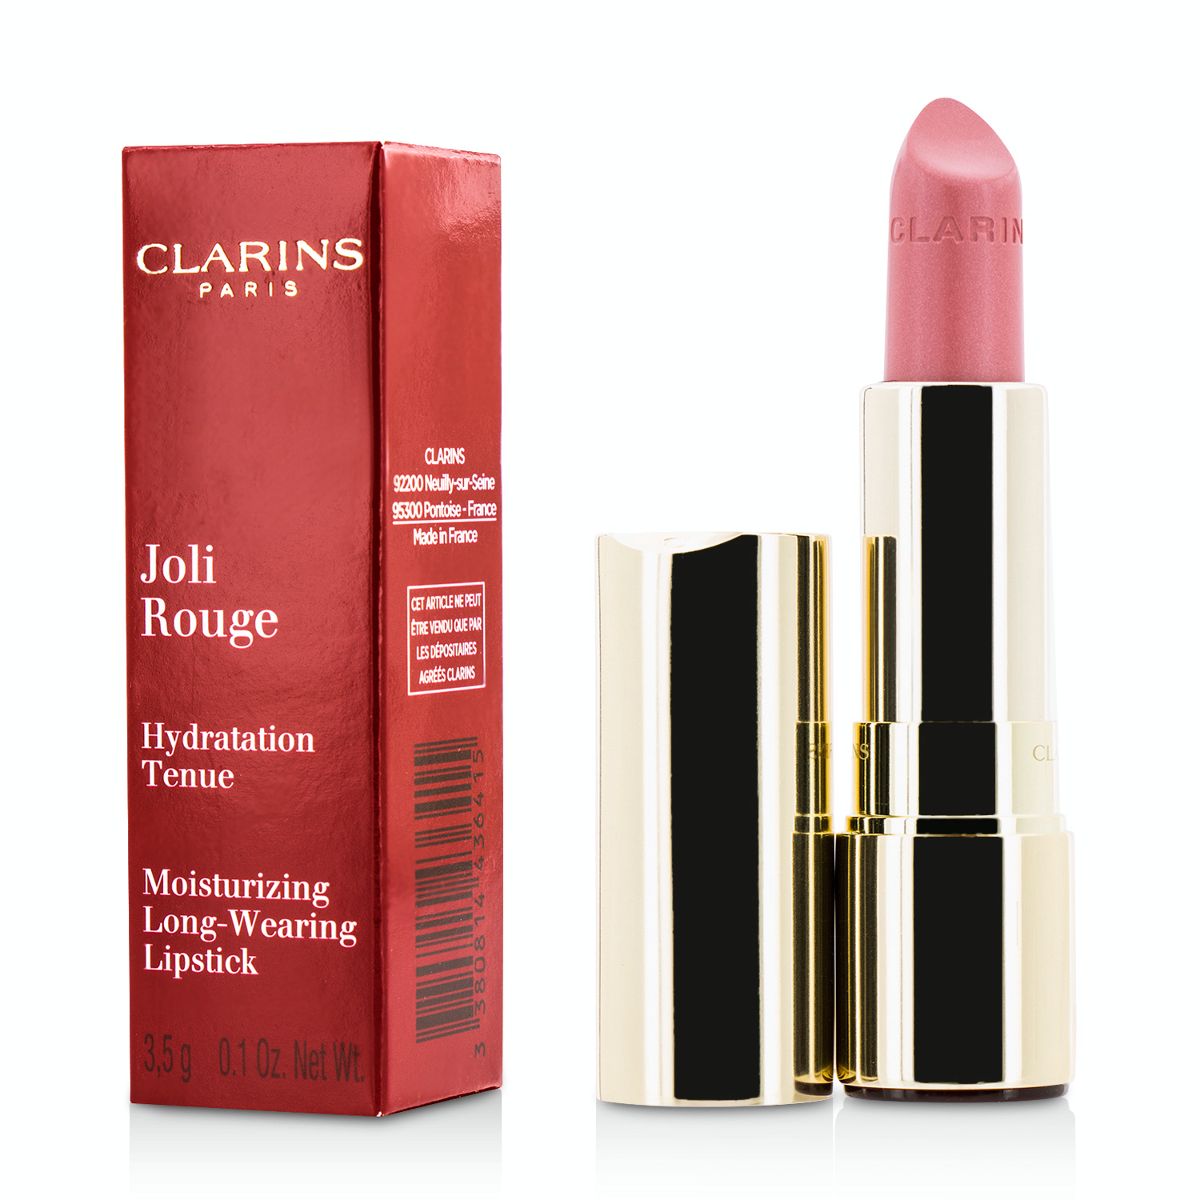 Joli Rouge (Long Wearing Moisturizing Lipstick) - # 748 Delicious Pink Clarins Image